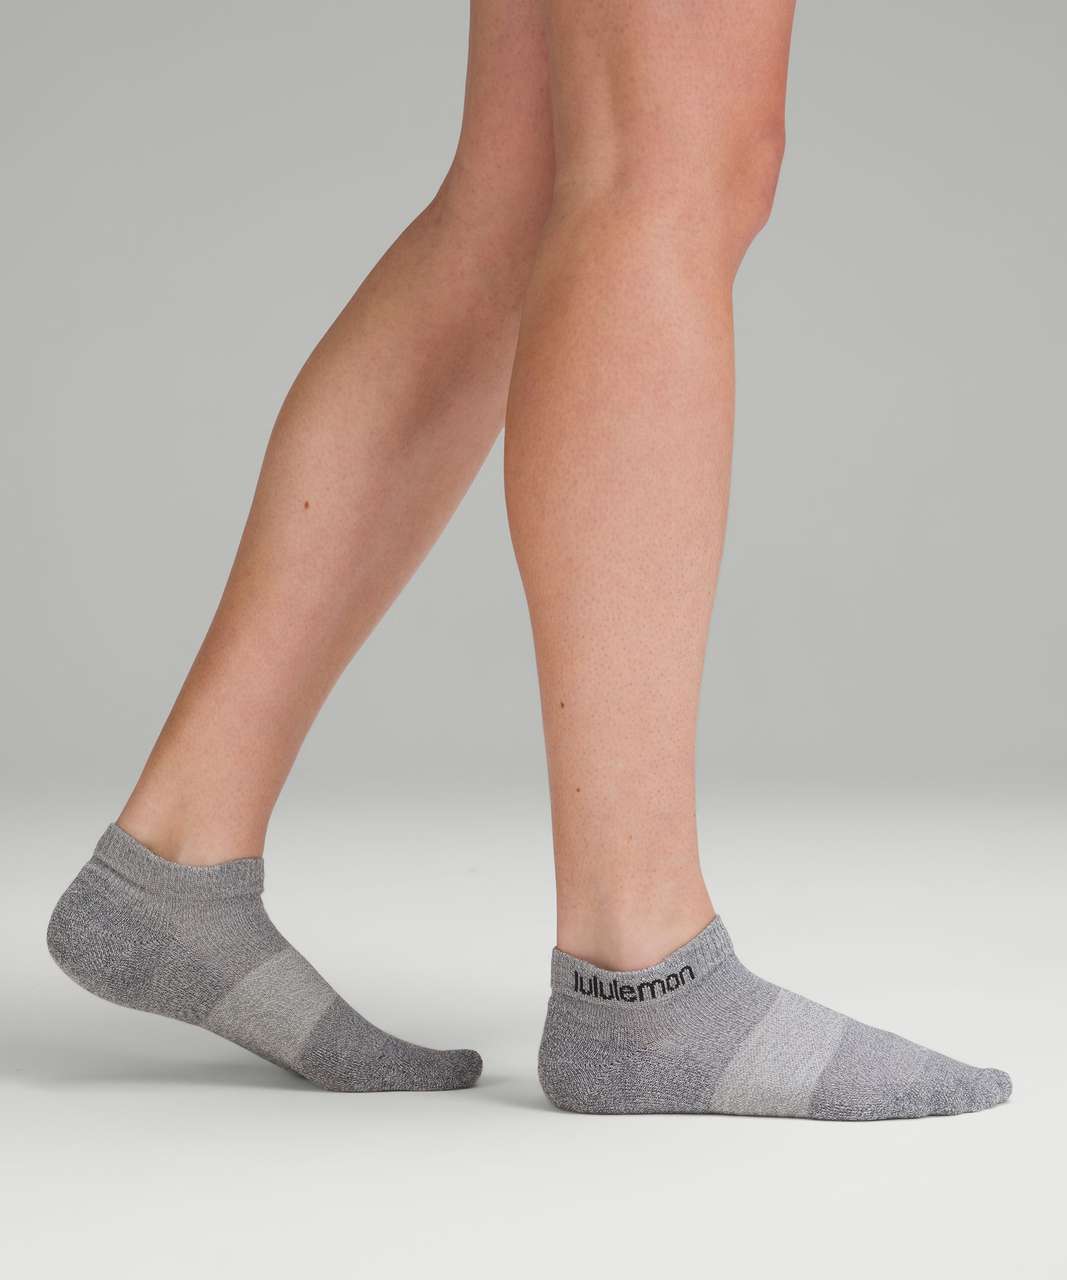 Lululemon Womens Daily Stride Comfort Ankle Sock *3 Pack - White / Heather Grey / Black